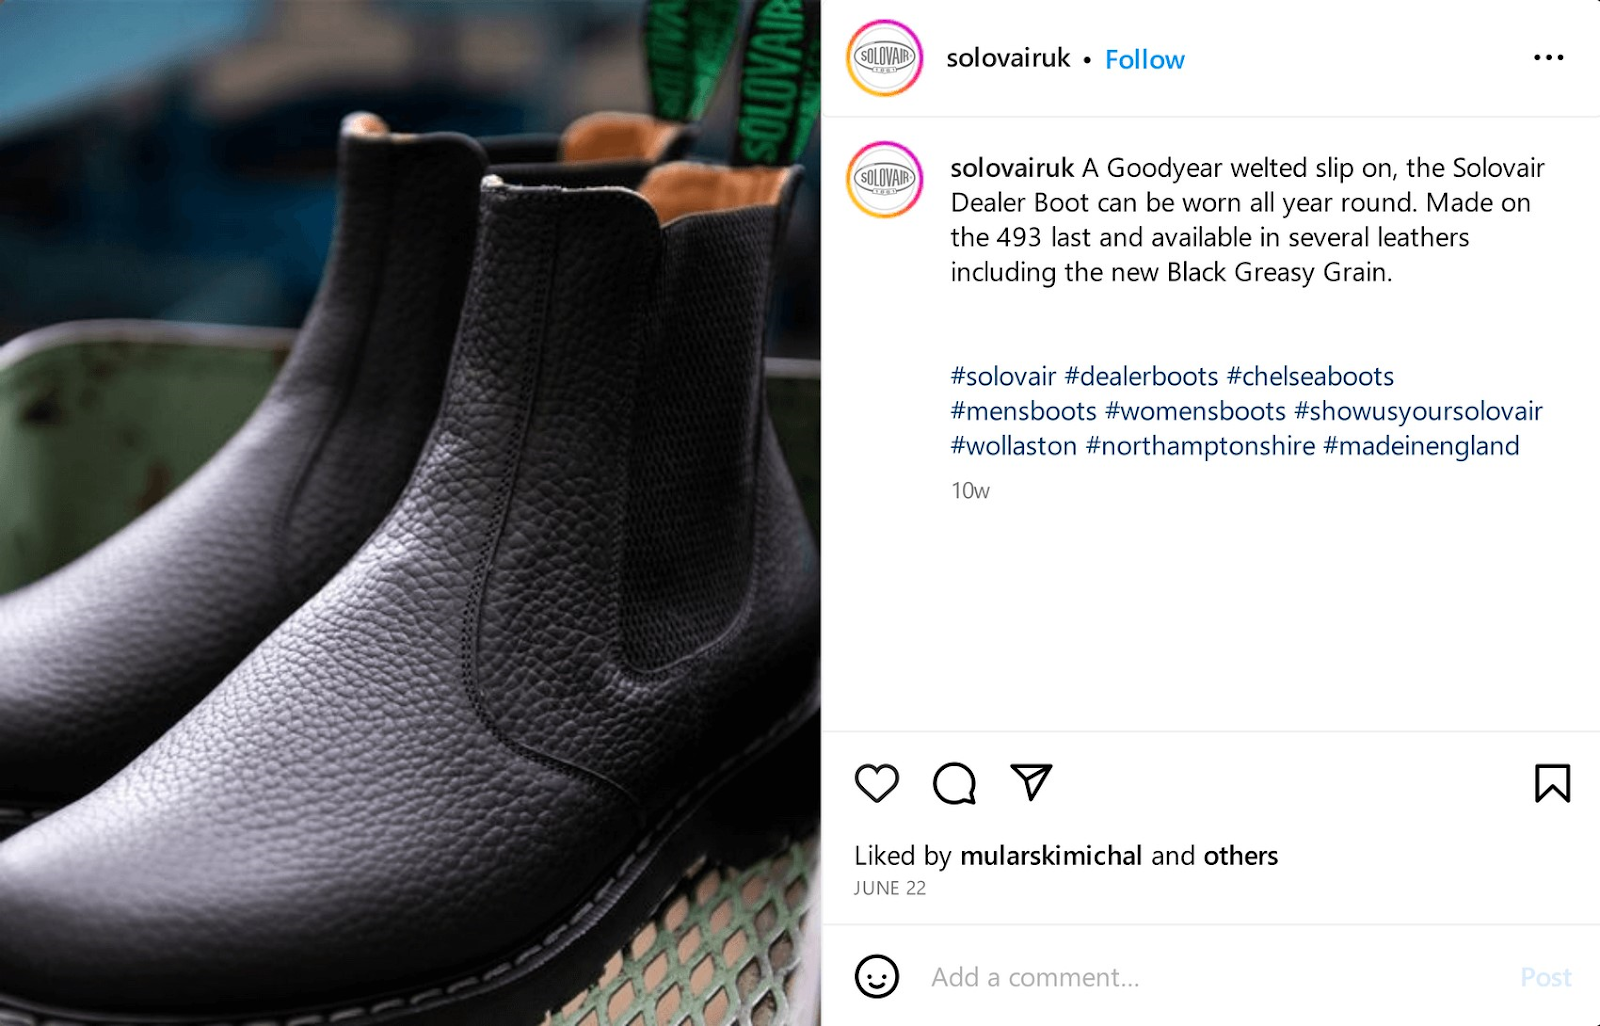 Solovair Instagram post about Dealer Boot